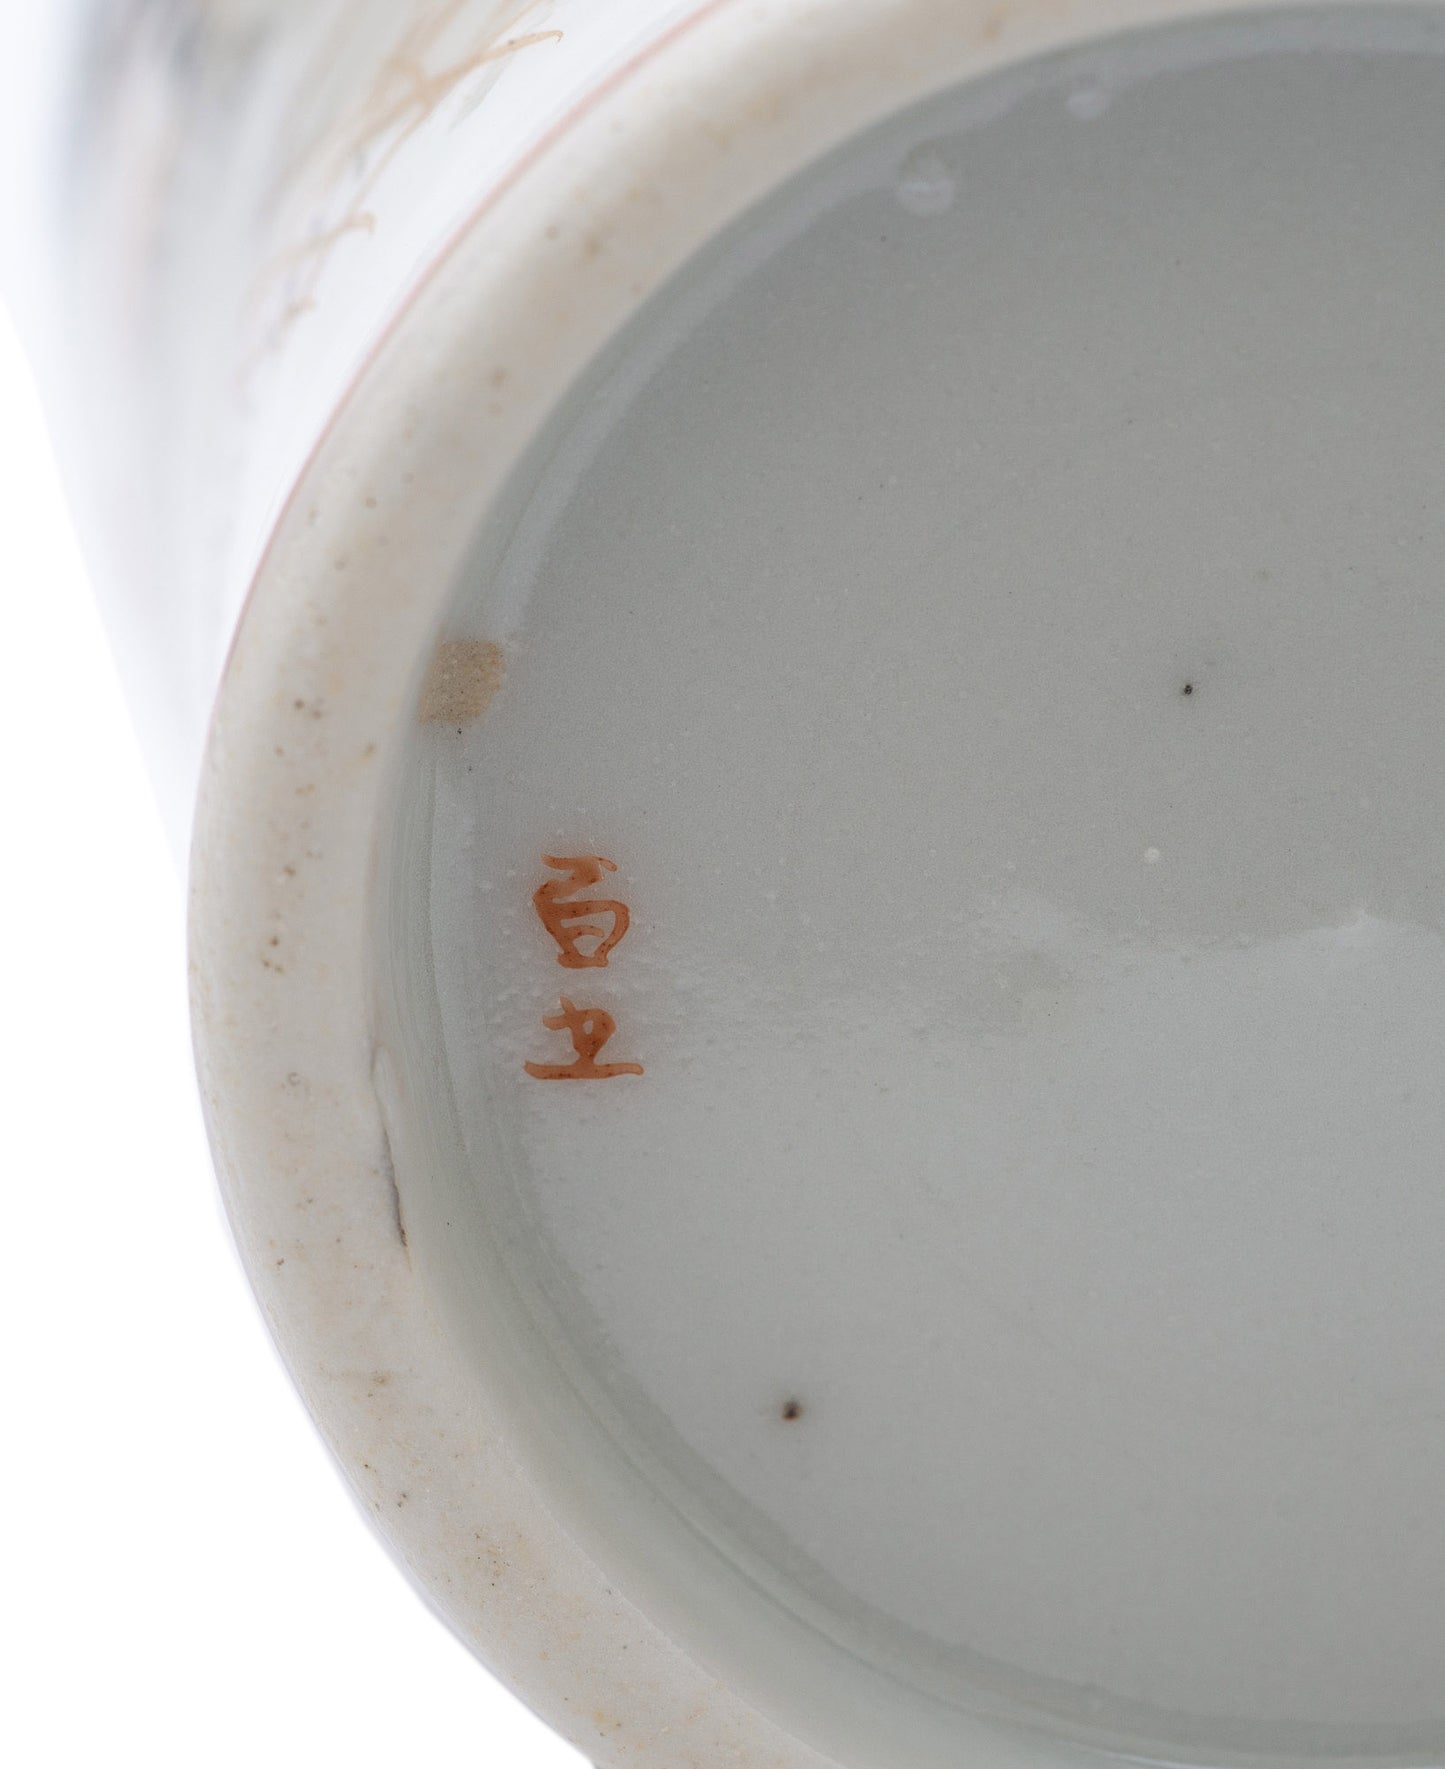 Antique Japanese Kutani Ware Porcelain Vase with Geese & Waterside Scene c1910 (Code 2491)